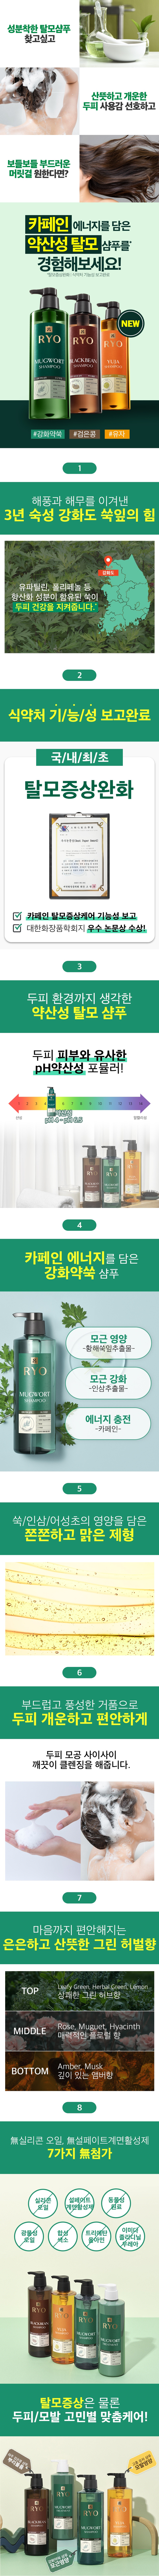 Ryo Mugwort Shampoo korean skincare product online shop malaysia China macau1